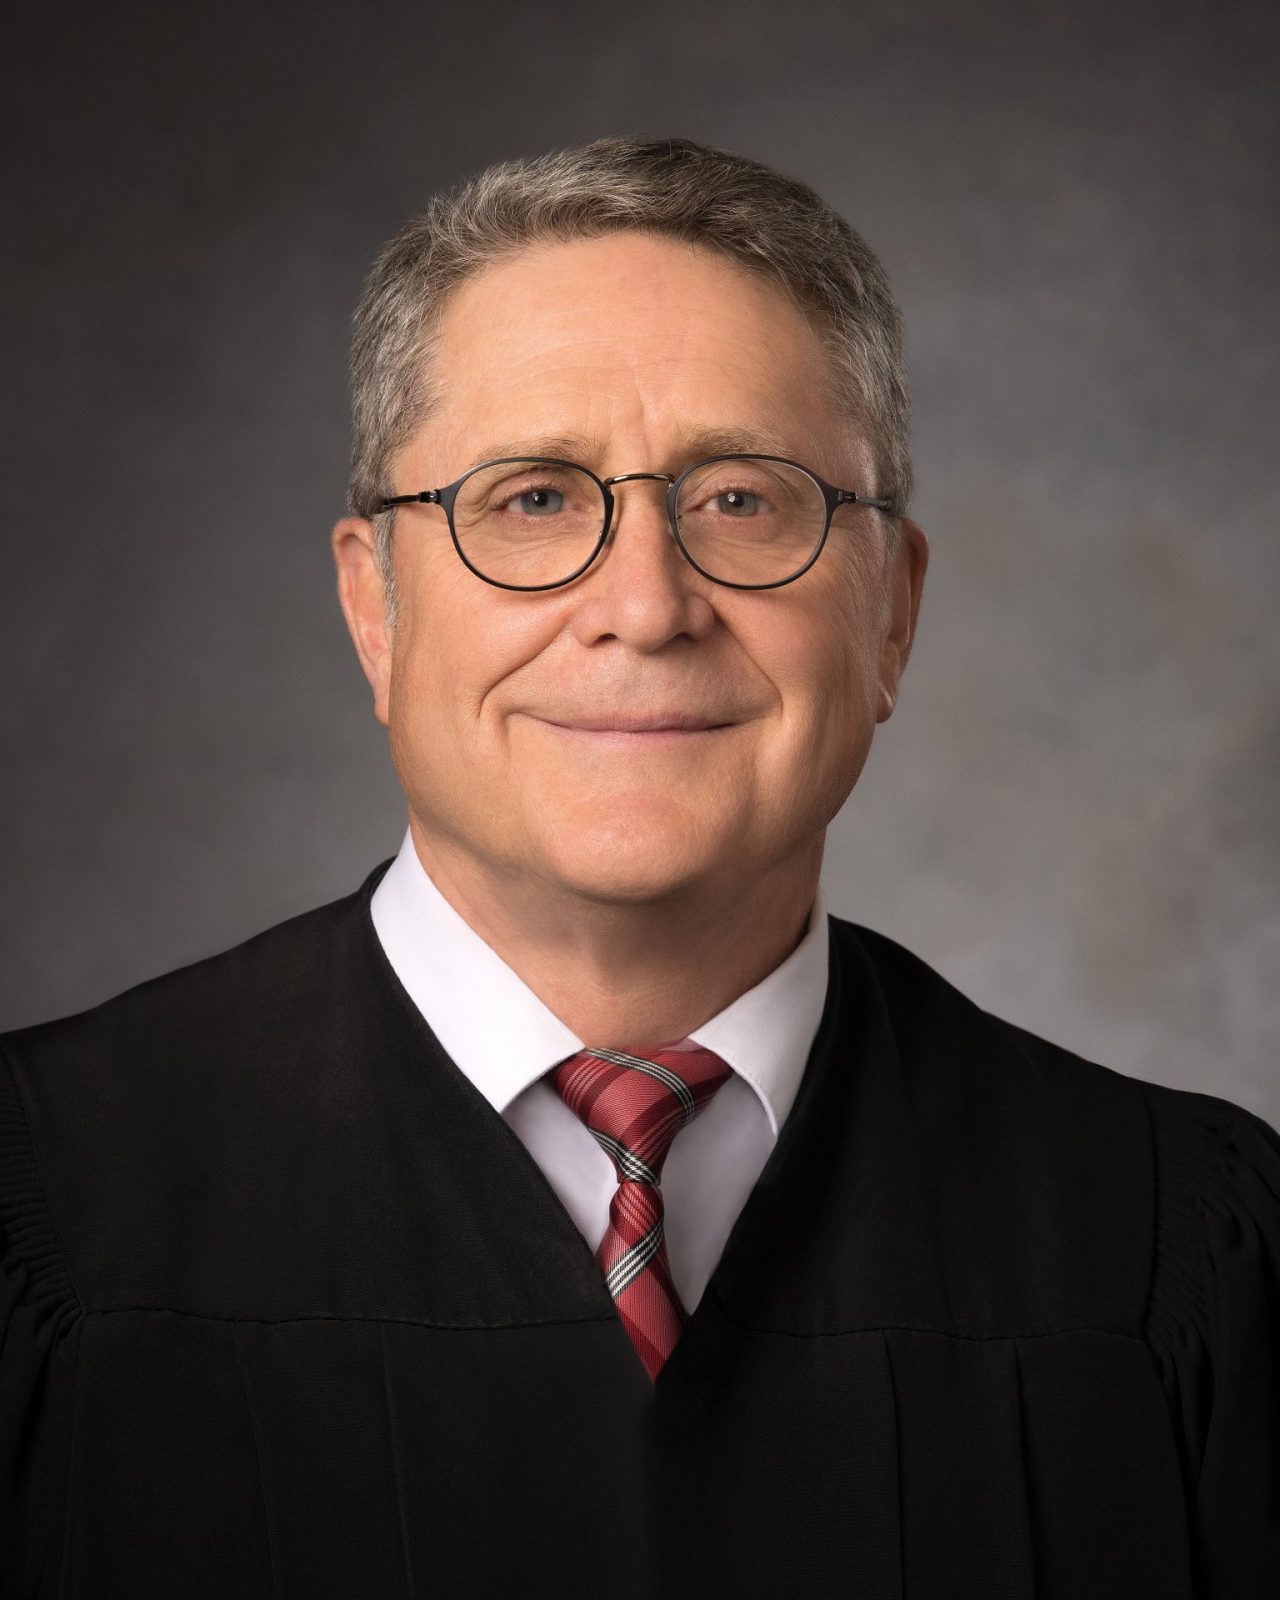 JUDGE JEFFREY C. WILCOX